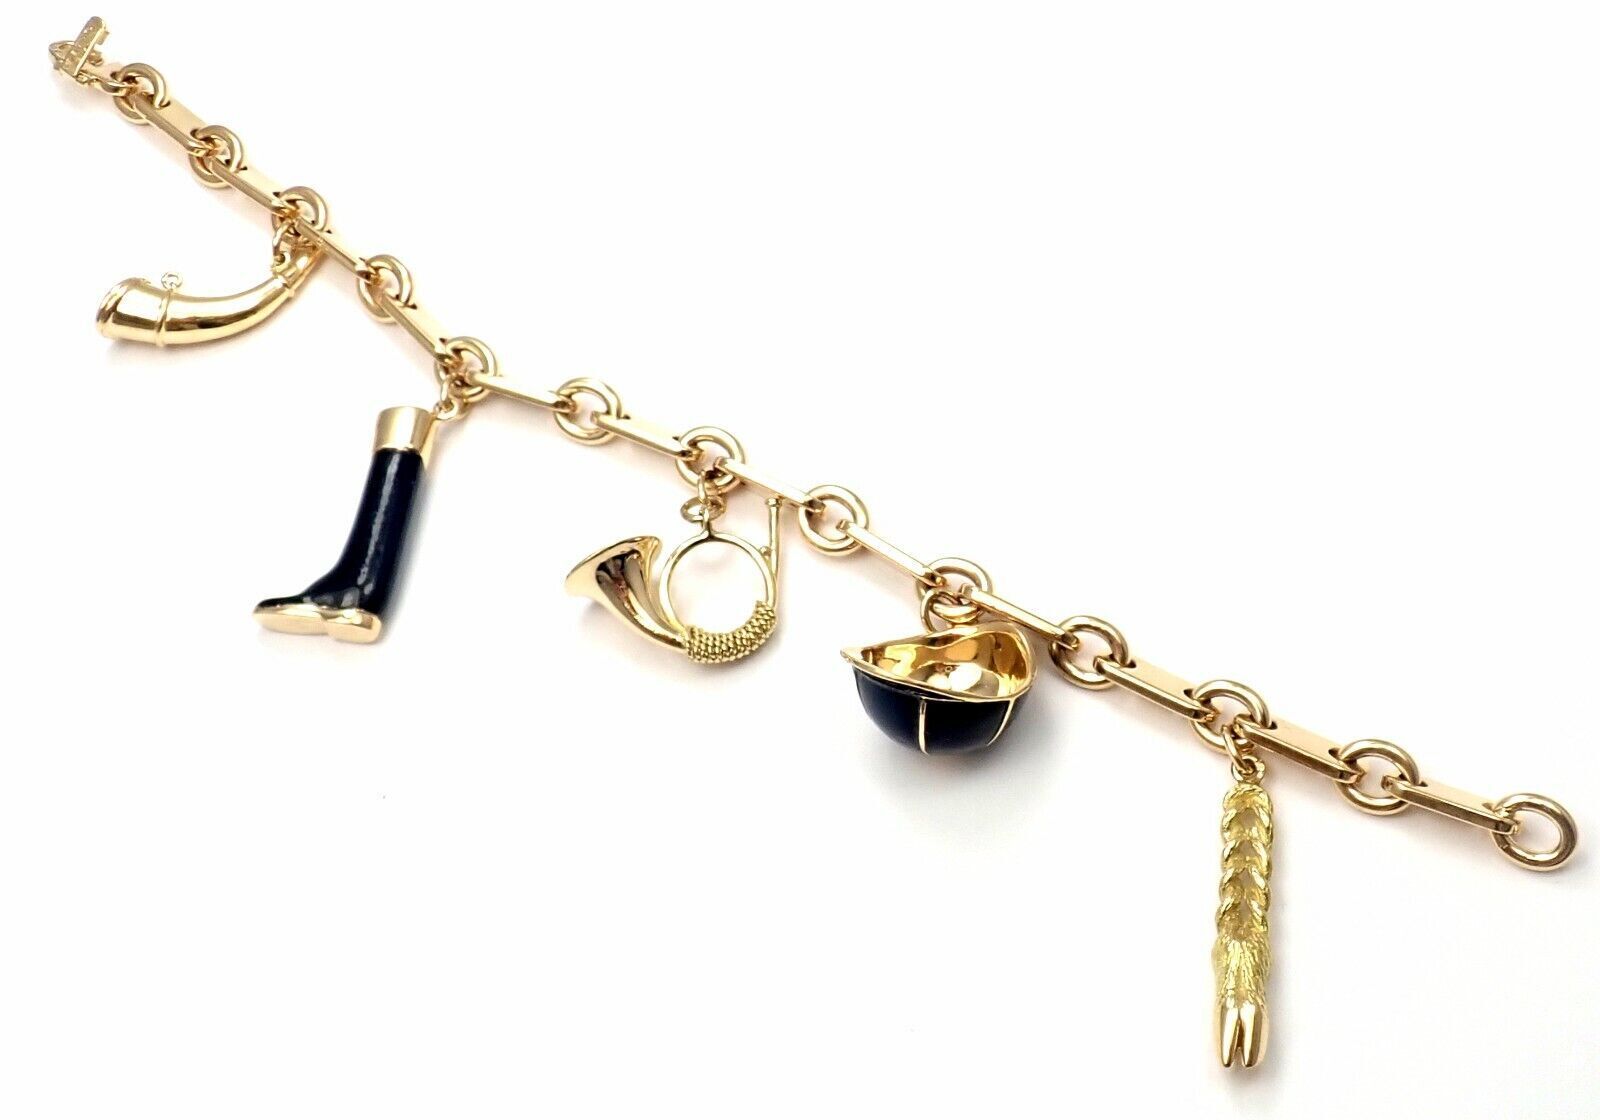 Stunning 18k Yellow Gold Charm Bracelet with 19 18k Gold Hermes